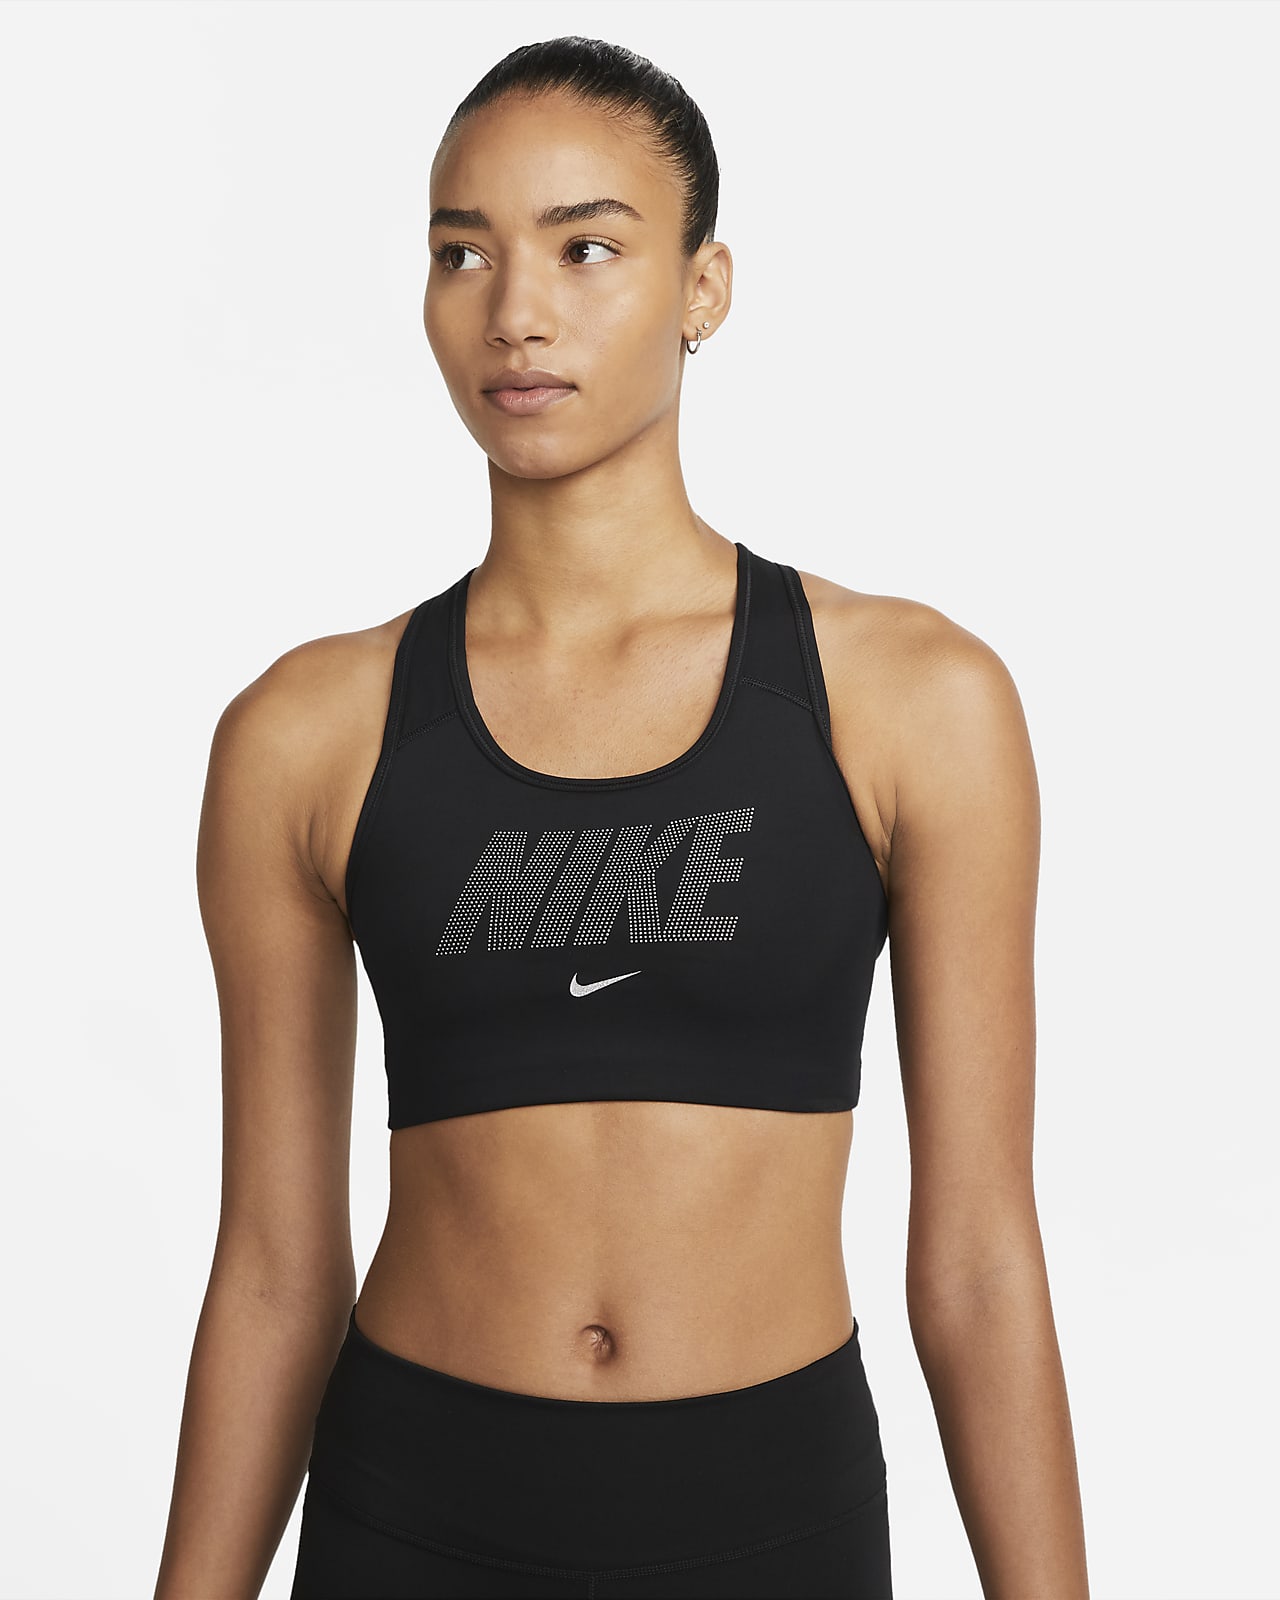 Nike Dri-FIT Swoosh Women's Medium-Support Non-Padded Metallic Graphic Sports Bra